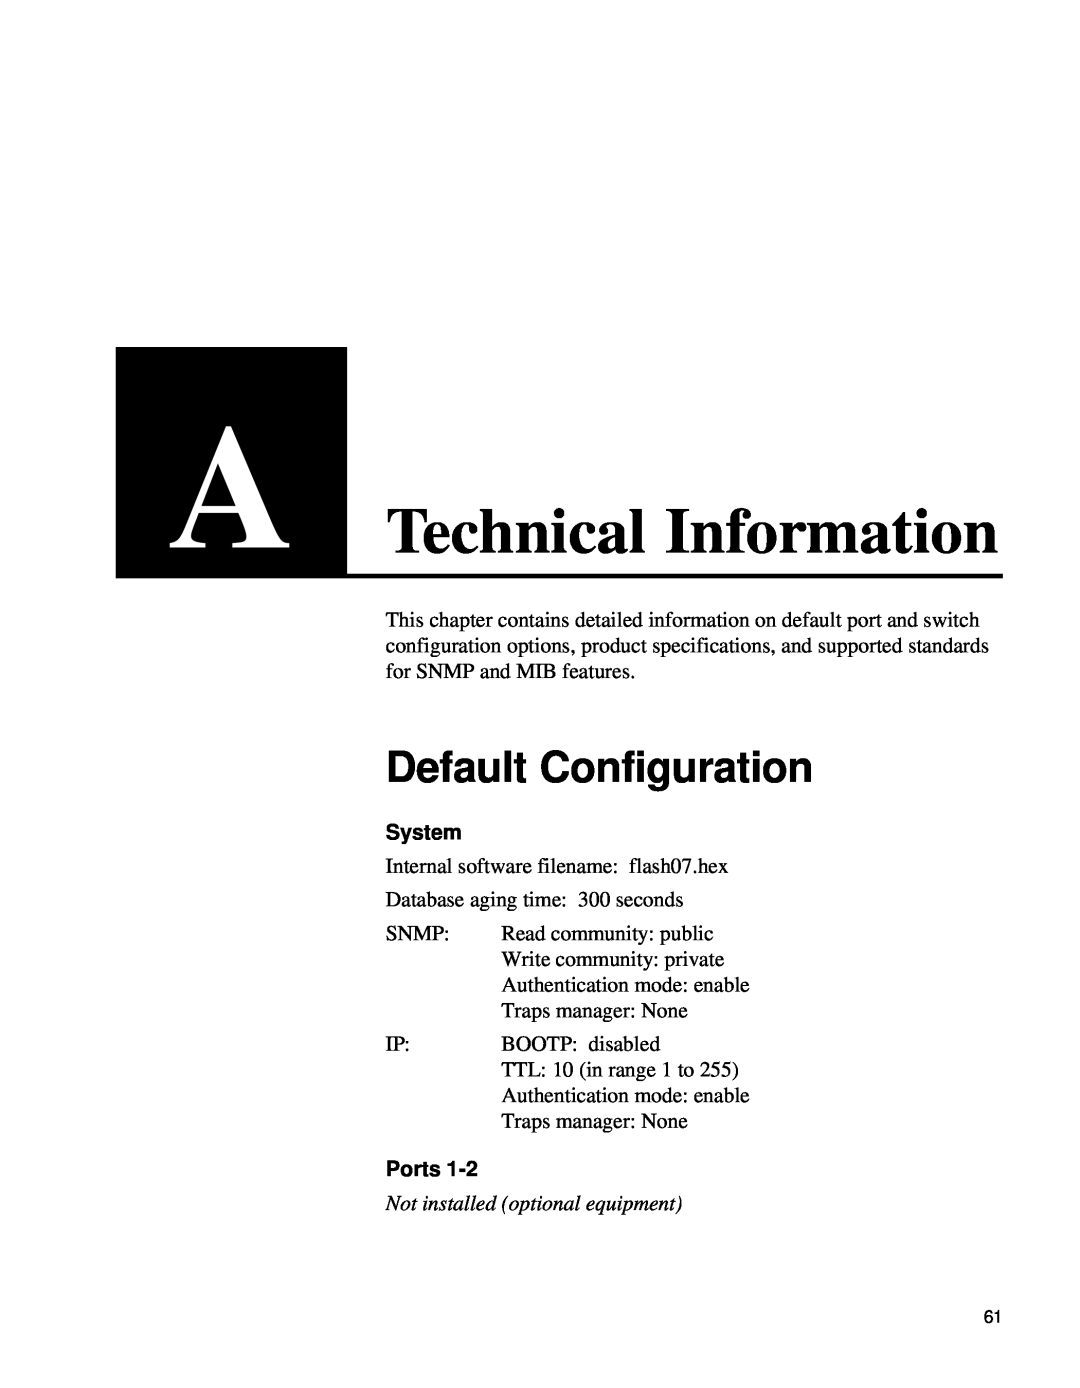 Intel 654655-001 manual A Technical Information, Default Configuration 